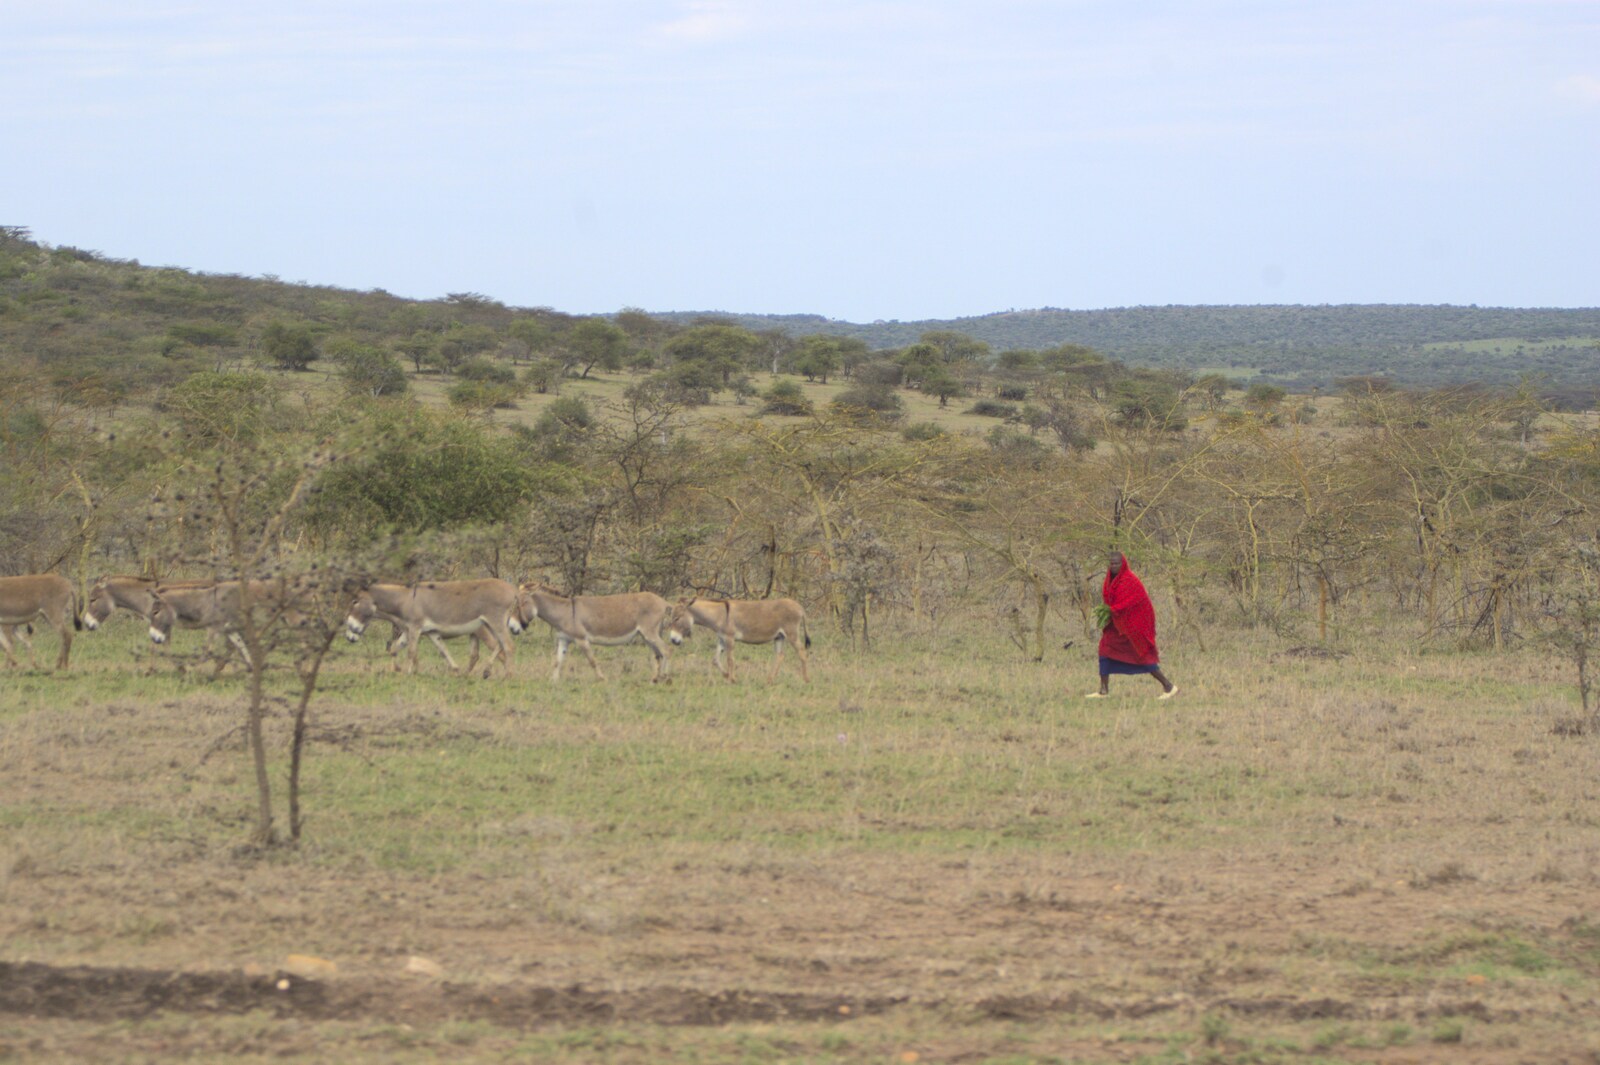 Narok to Naivasha and Hell's Gate National Park, Kenya, Africa - 5th November 2010: A herd of donkeys